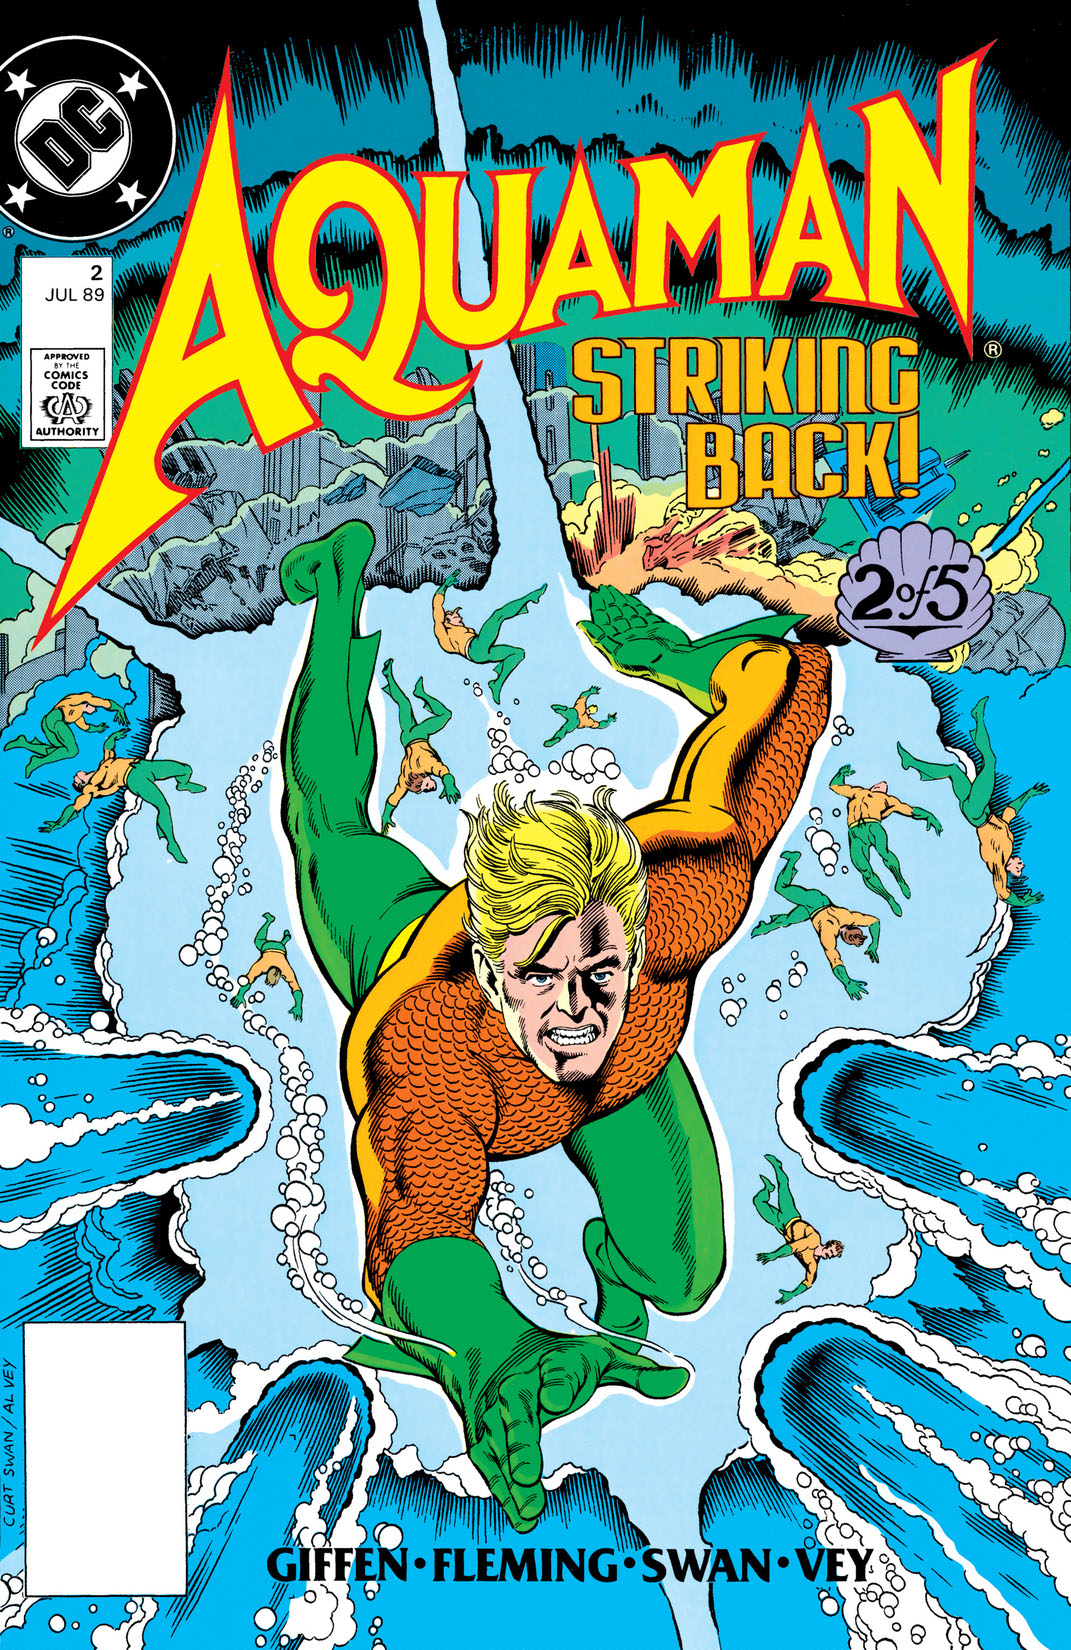 Aquaman (1989-1989) #2 preview images